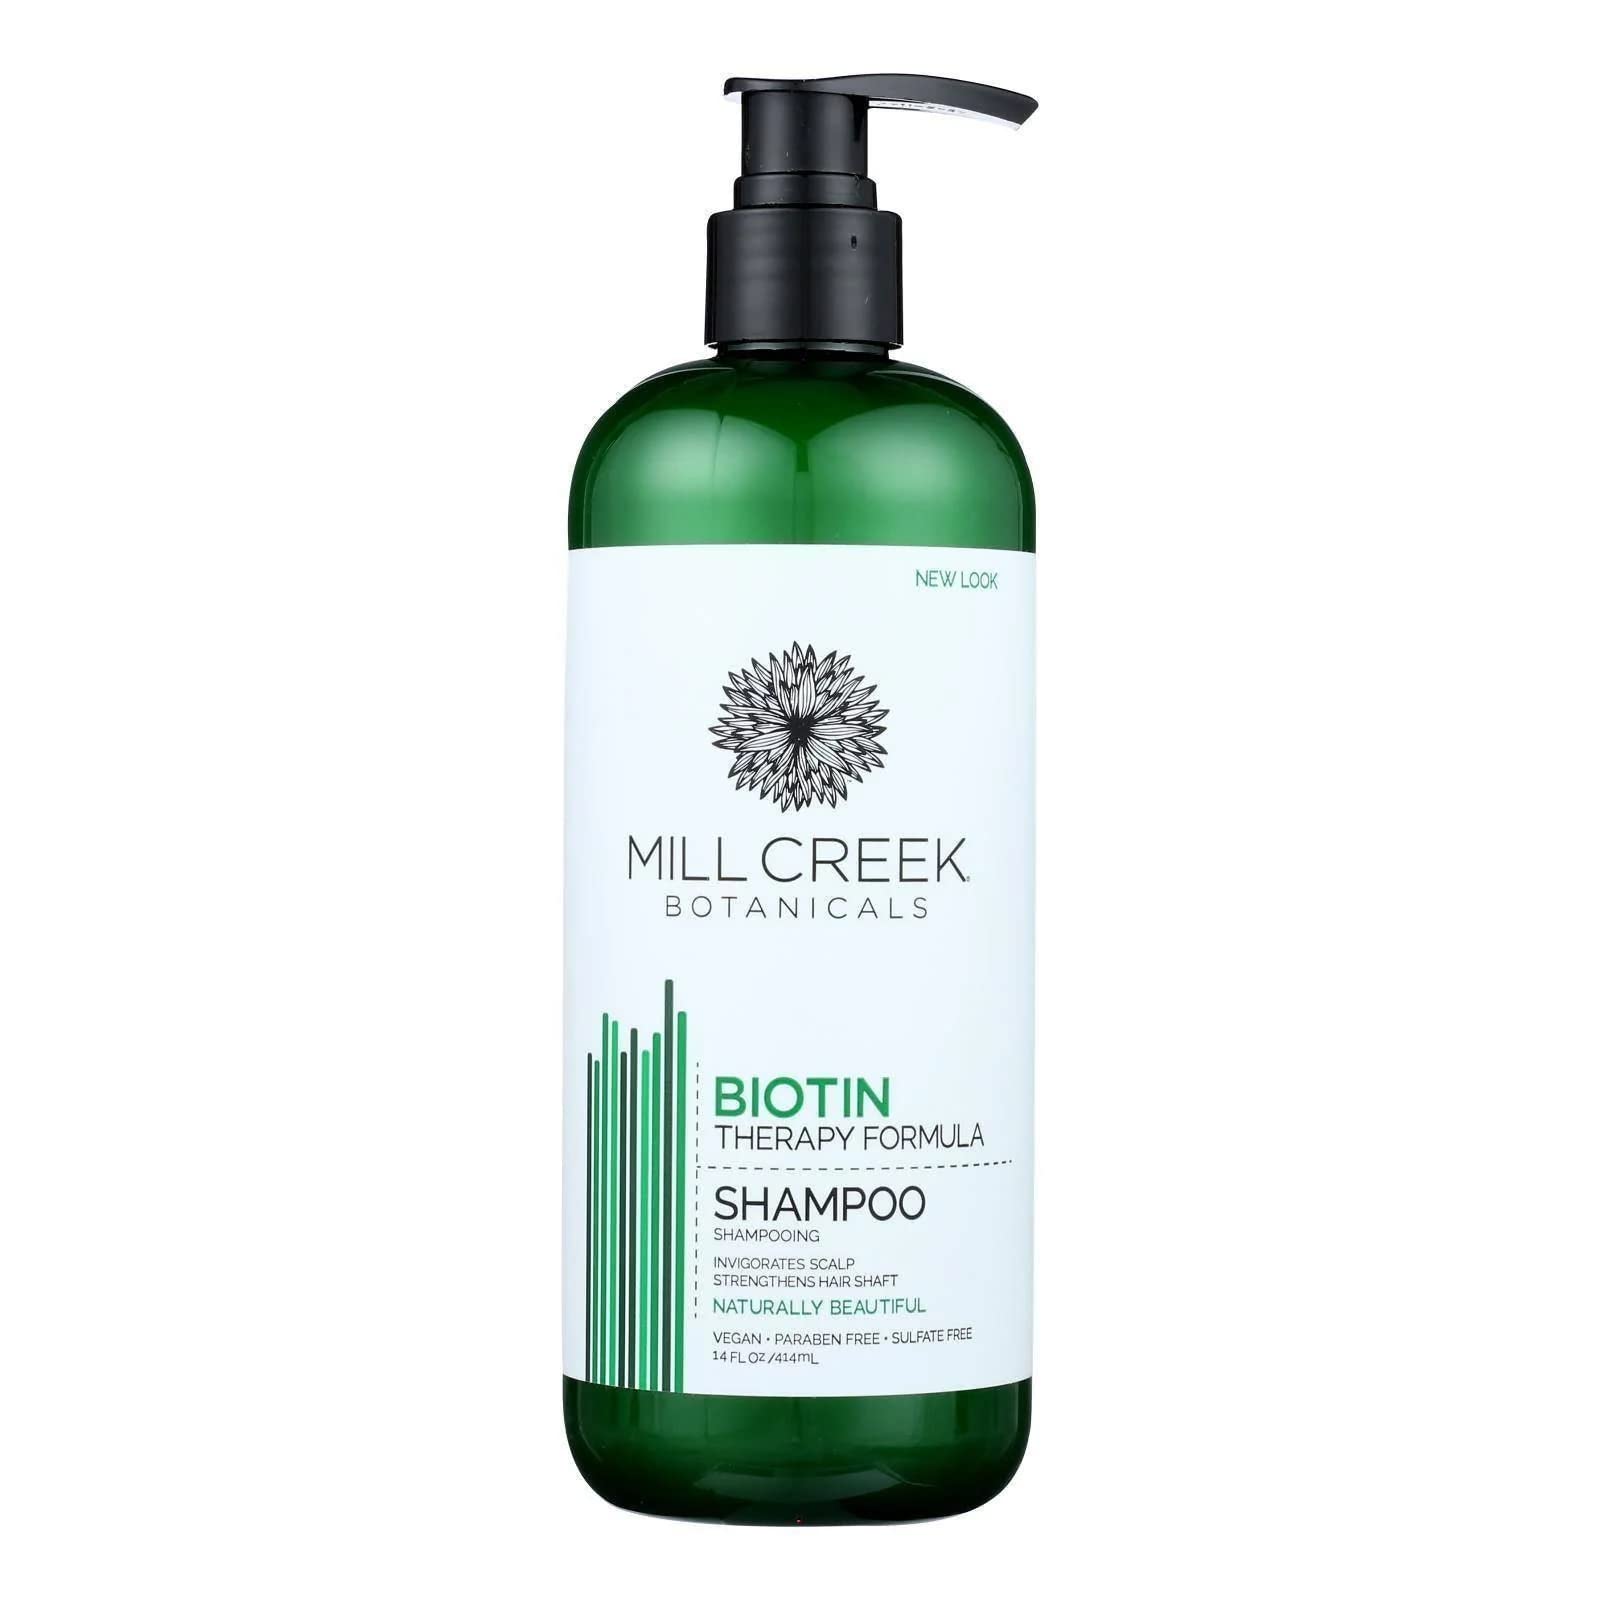 Mua Mill Creek Biotin Shampoo, 14 Fluid Ounce (One Pack) trên Amazon Mỹ ...